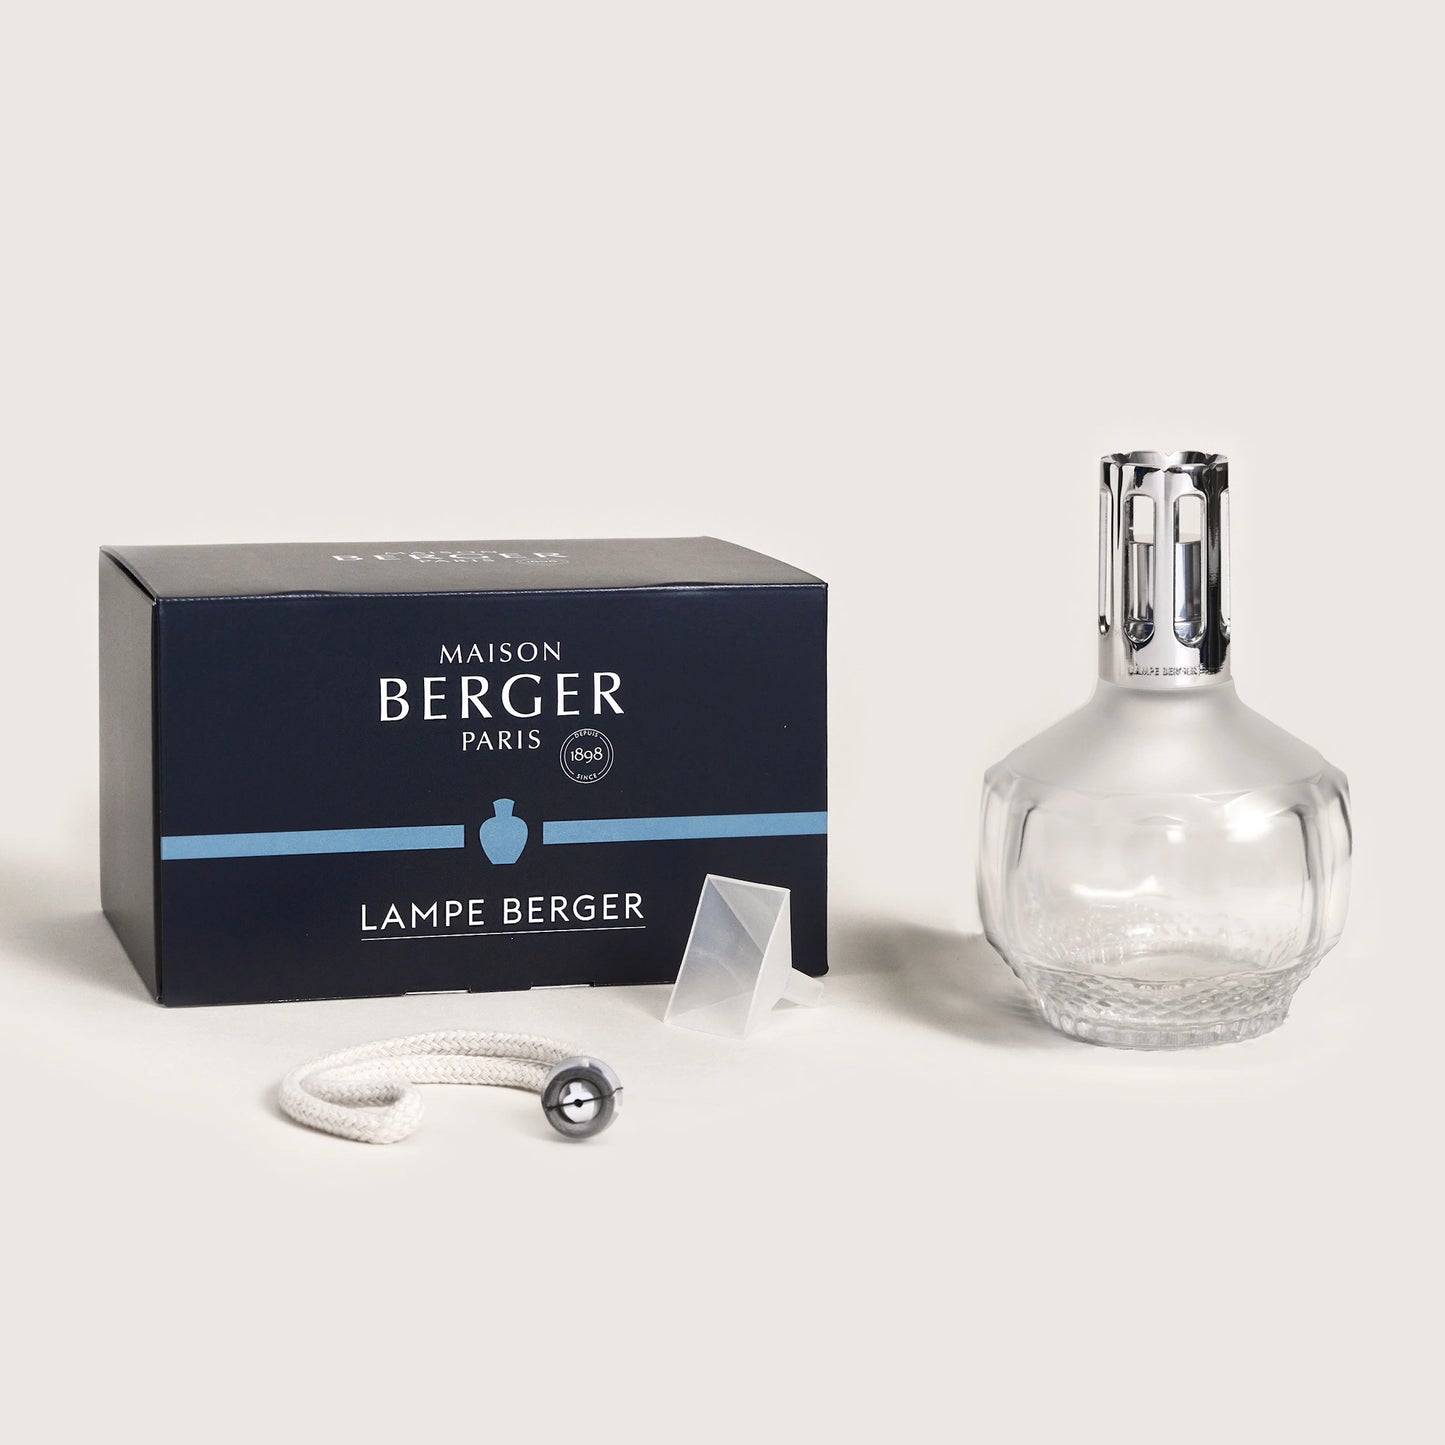 Clear Molecule Maison Berger Lamp Berger